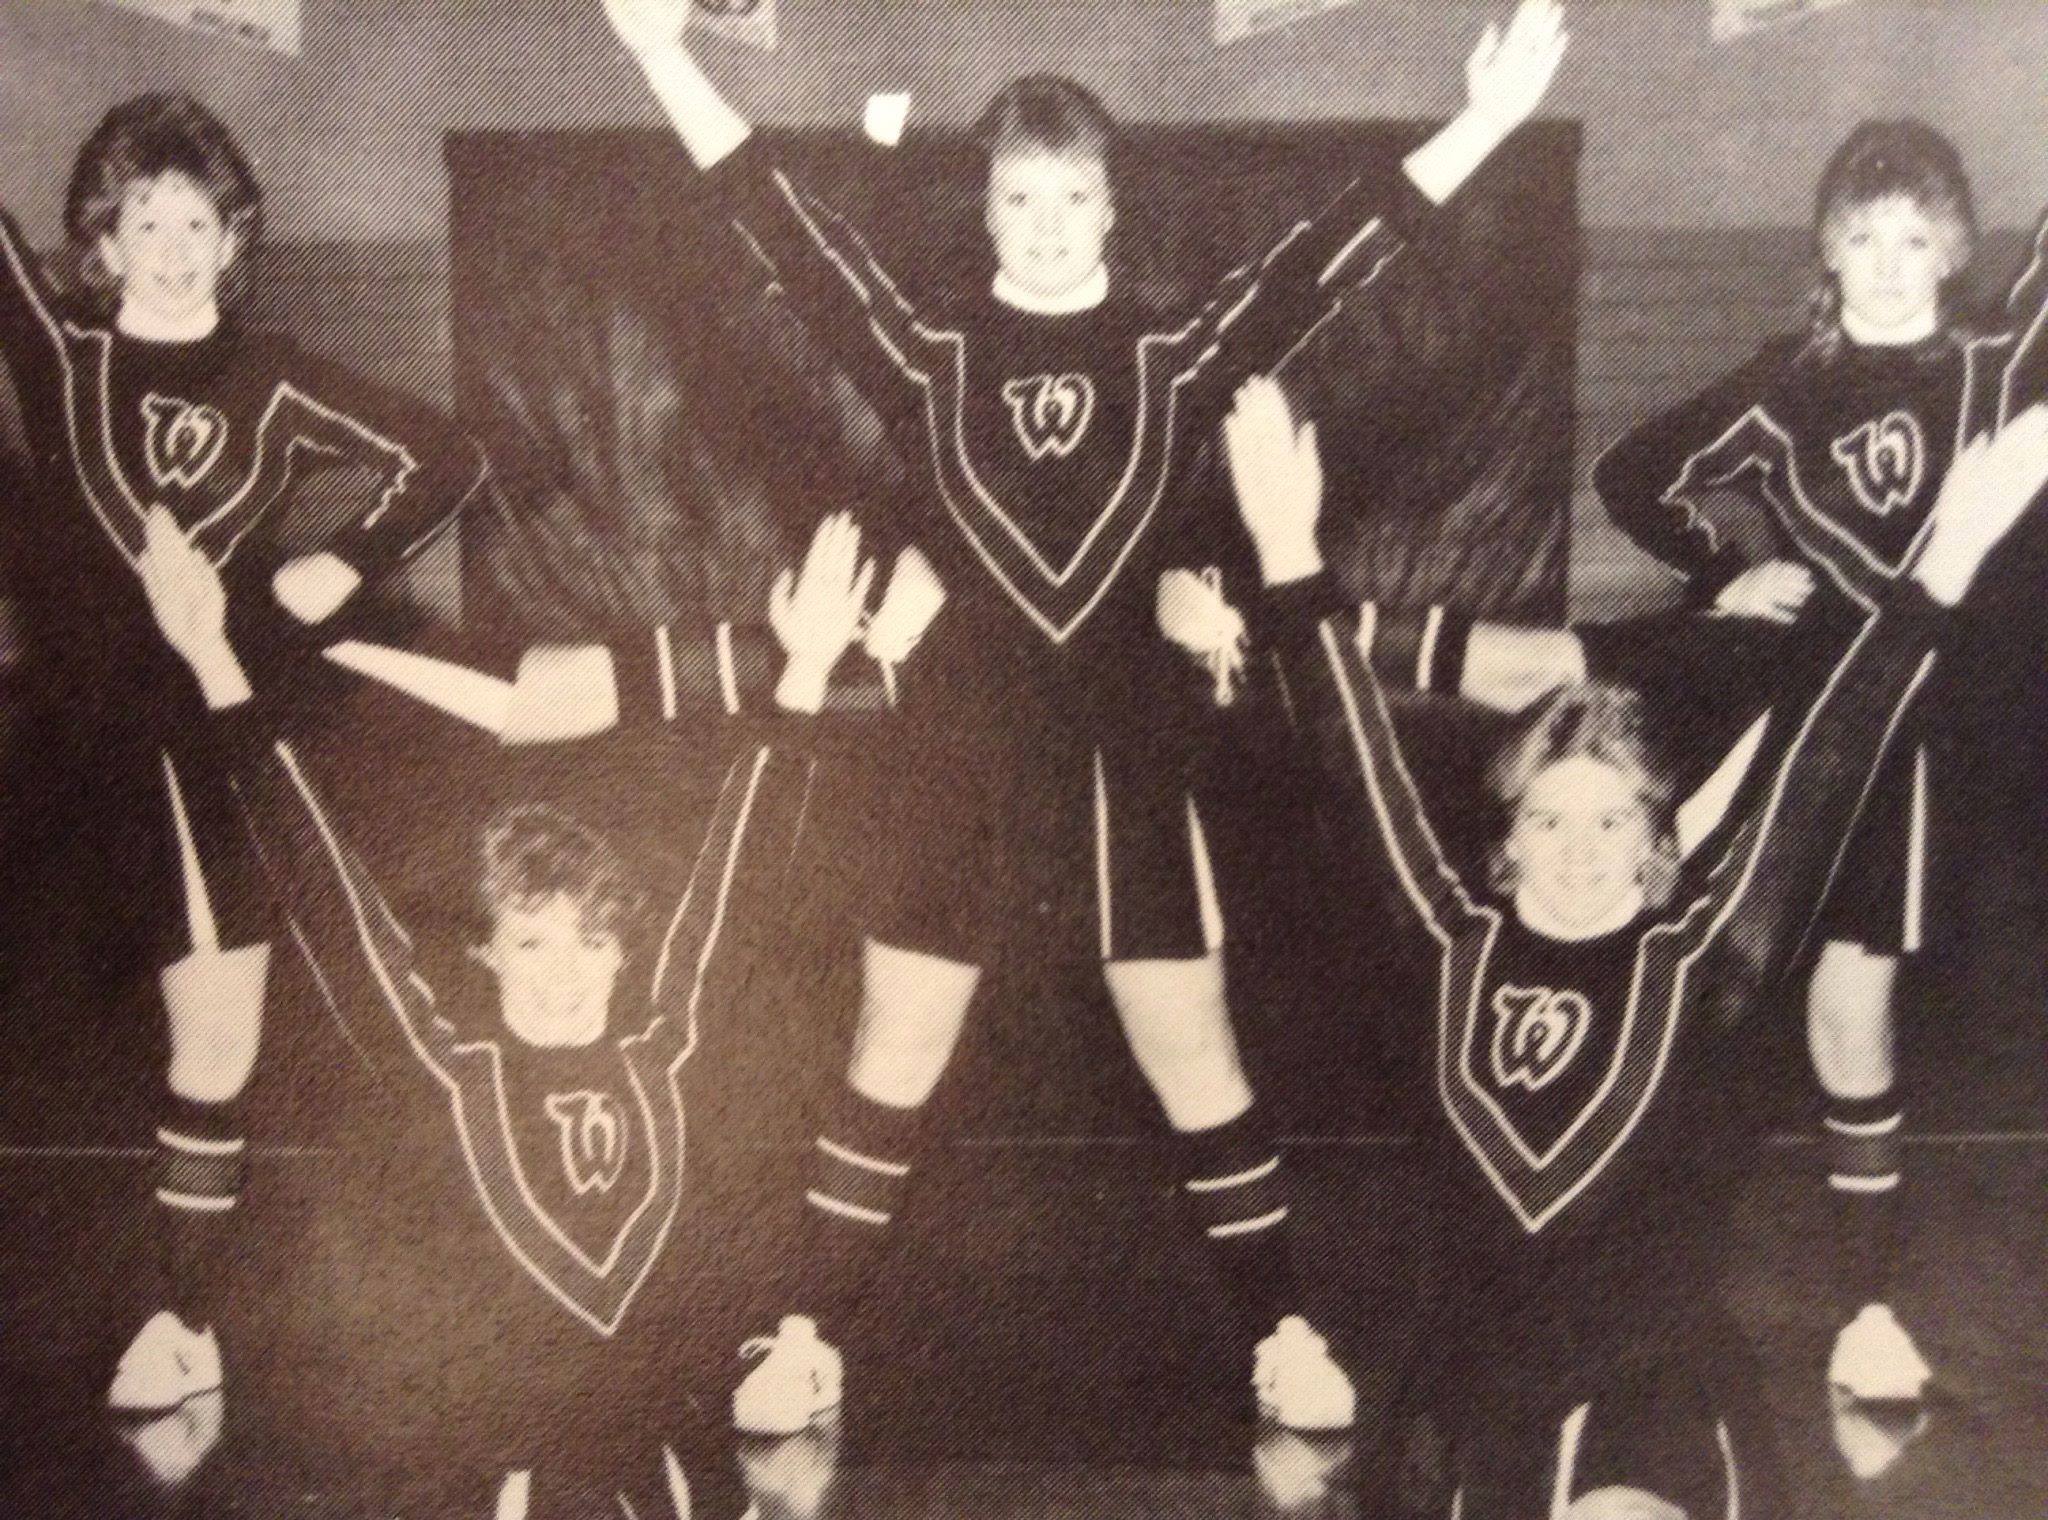 1985-1986 Whitehall Norse Cheer Squad Sondra Haug, Renee Helstad, Dawn Johnson, Michele Haralson, Angie Andre.